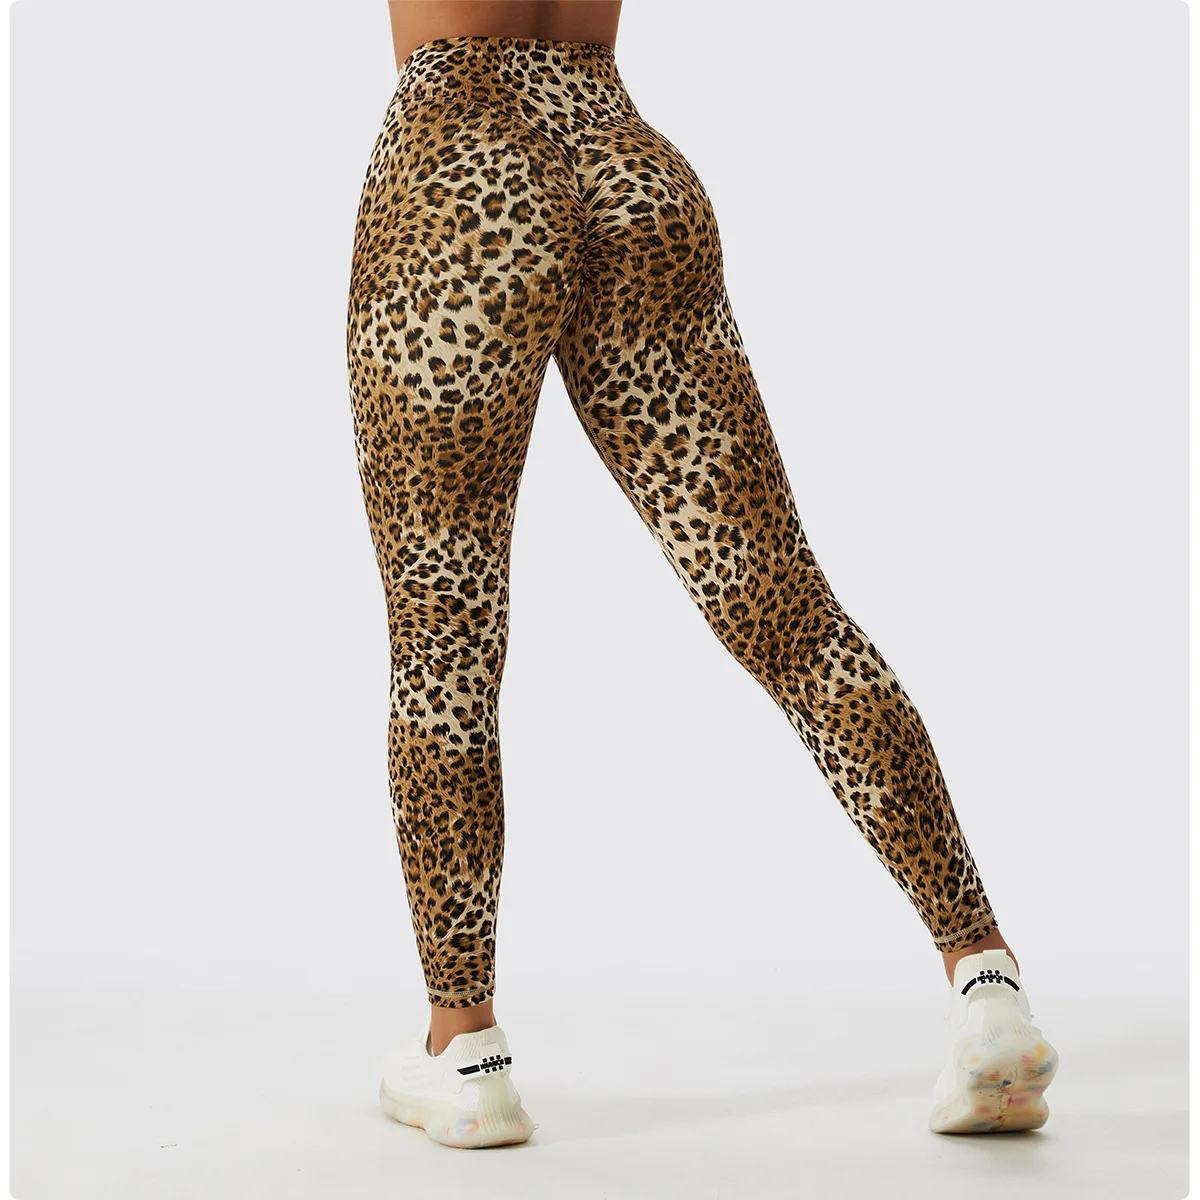 

Leopard Print Yoga Pants Women Sexy Peach Hip Lifting High Waist Tight Sports Leggings Camo Nude Fitness Booty Scrunch Tights